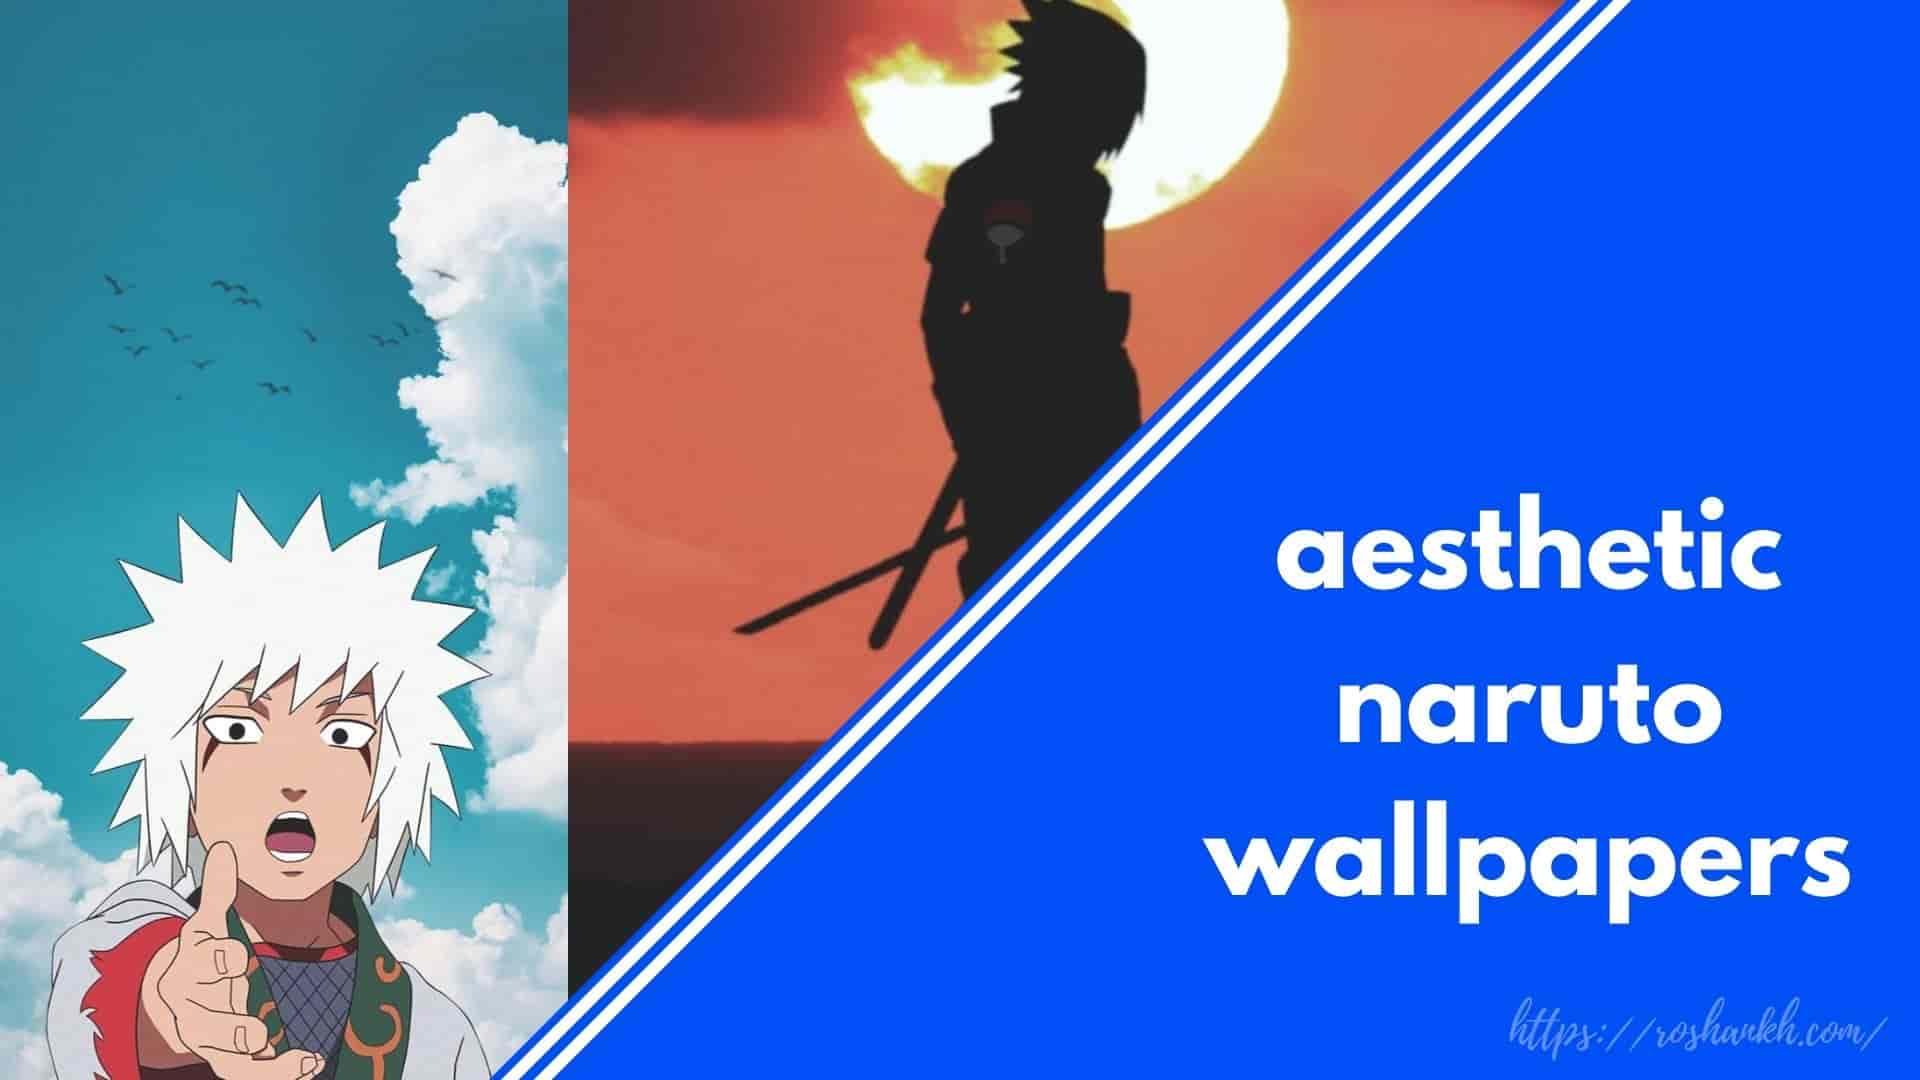 Aeisthetic naruto wallpapers